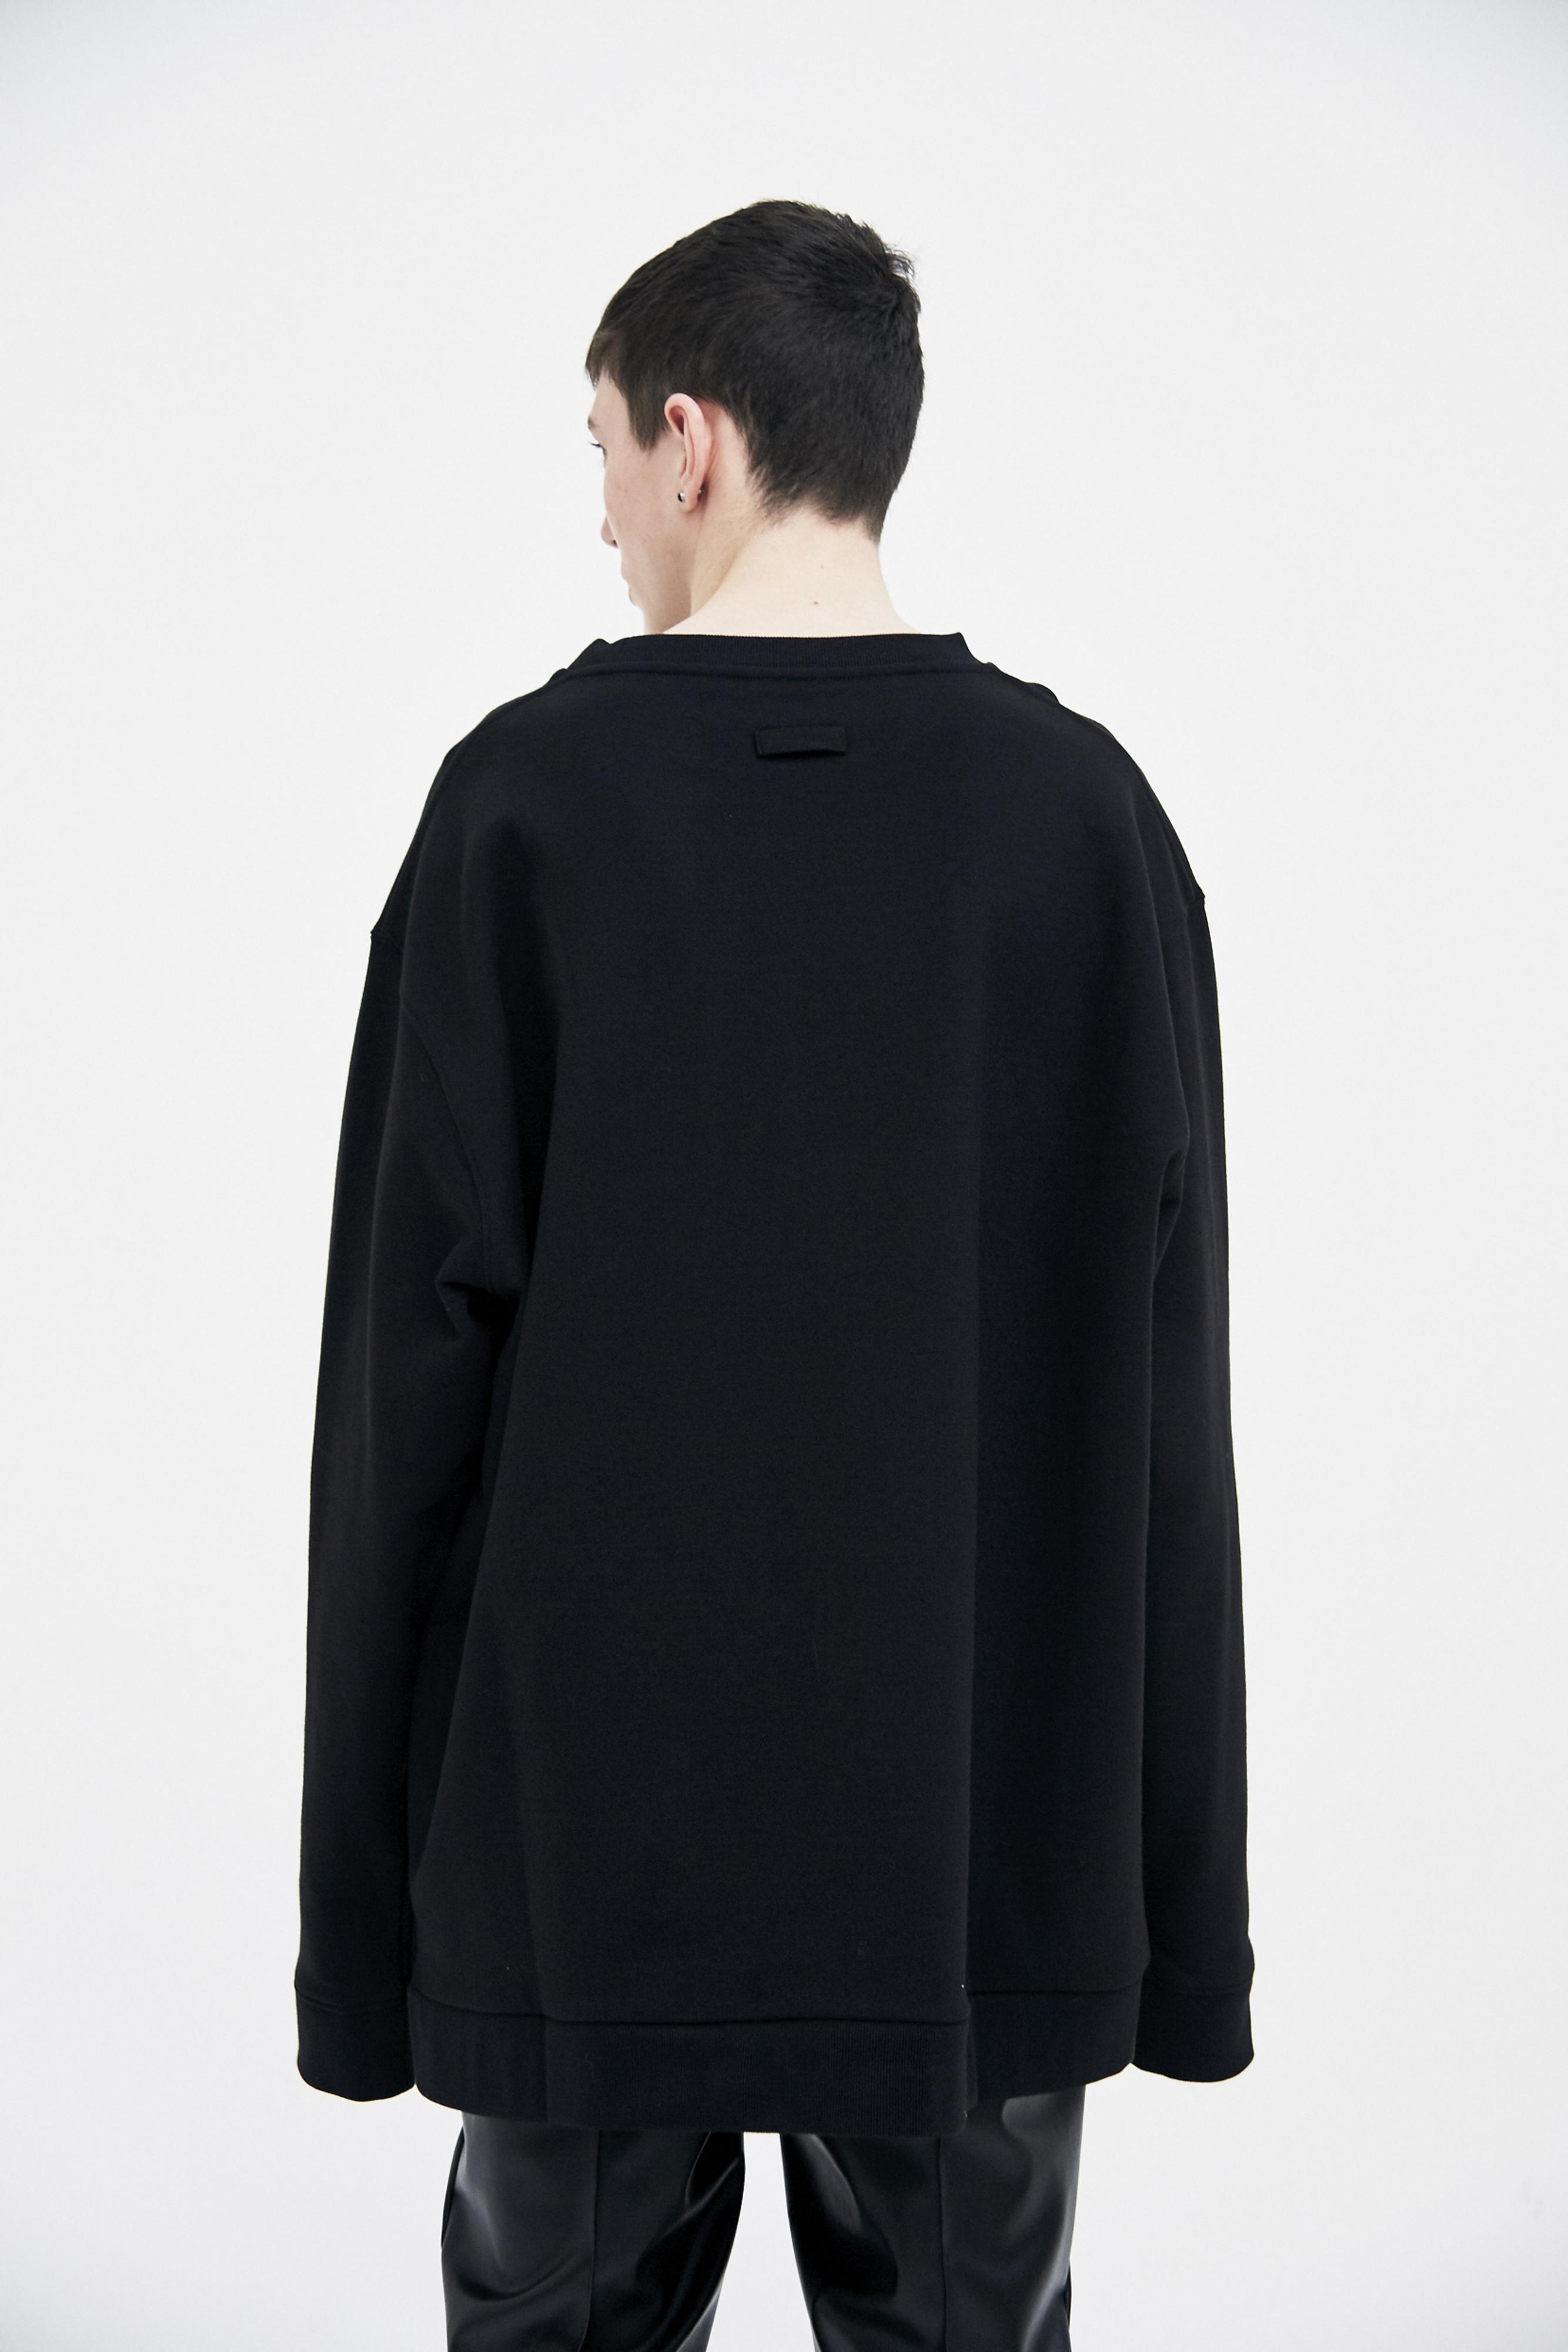 Raf Simons Cotton Oversized Crewneck Sweater in Black for Men - Lyst